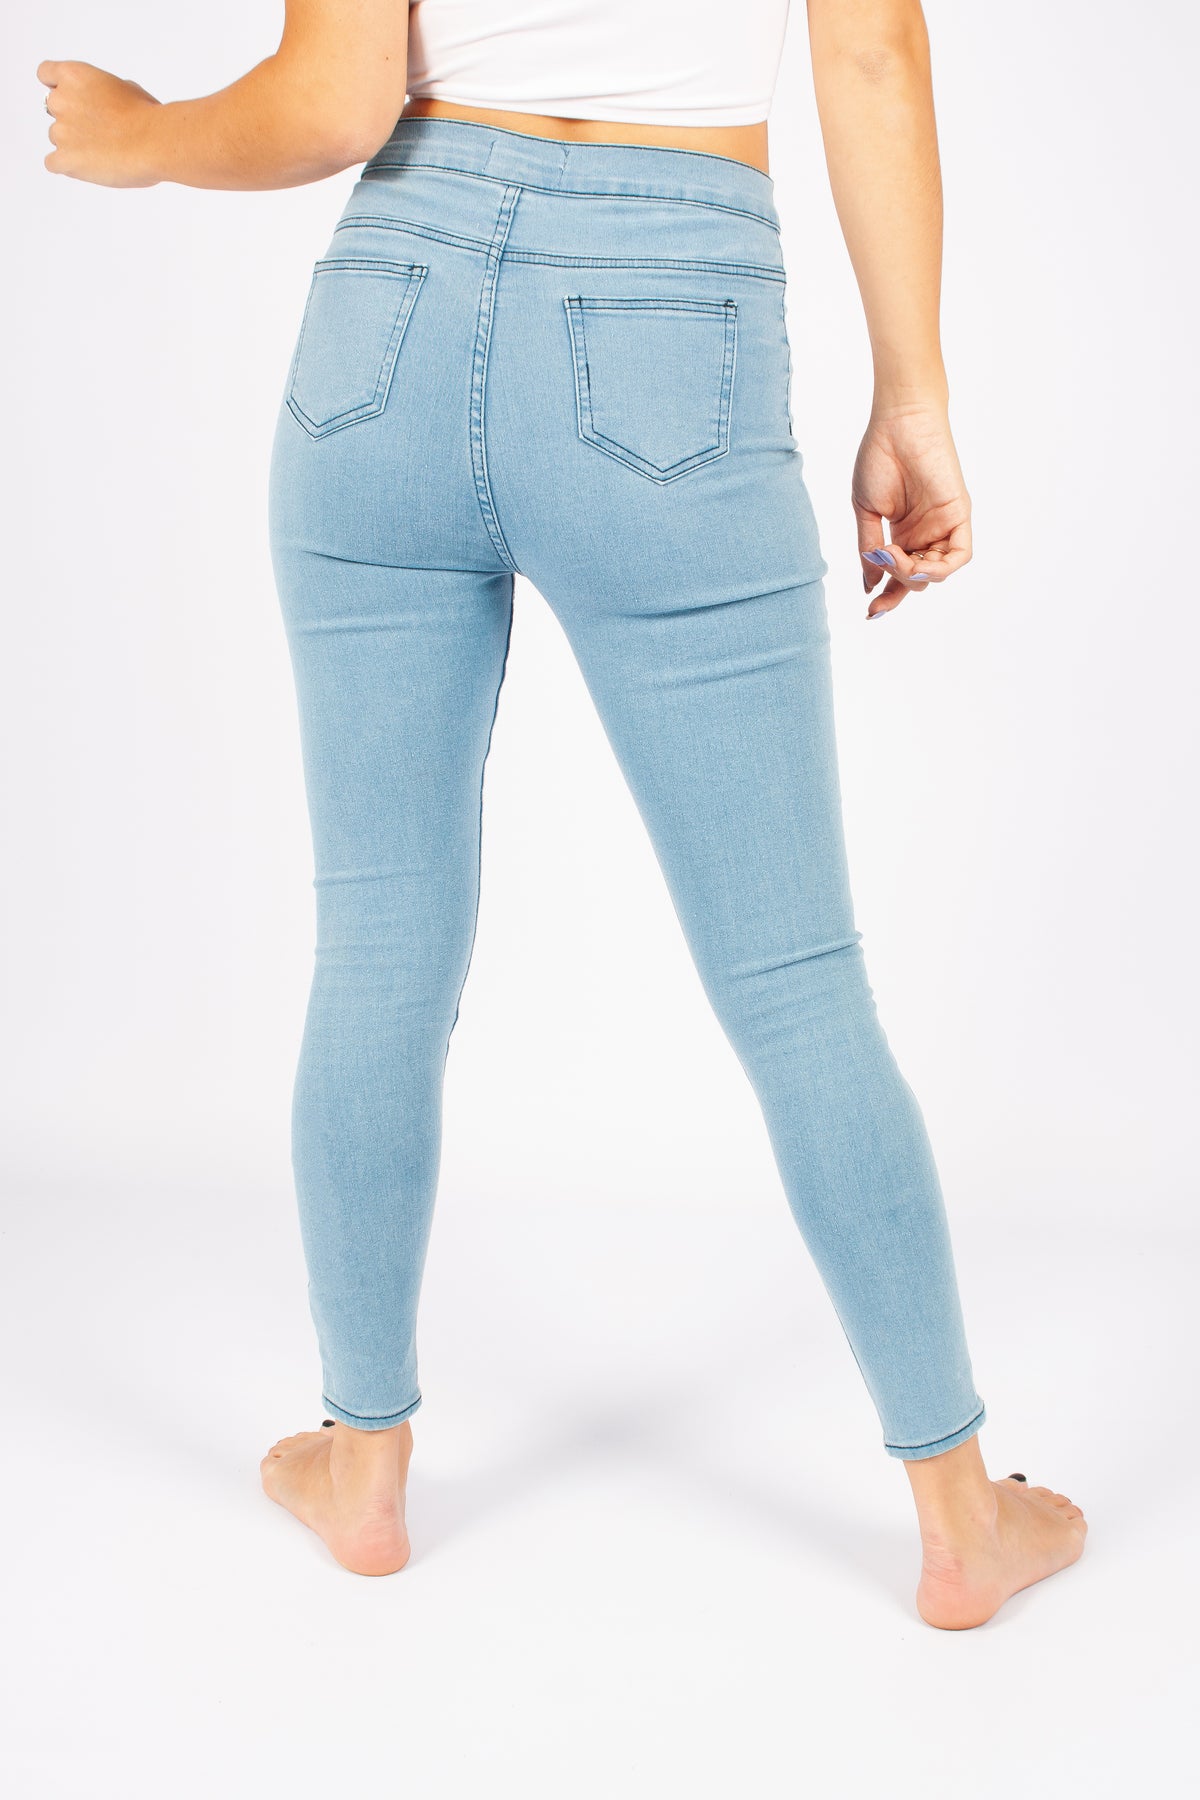 Denim Jeans – Clothing Junction